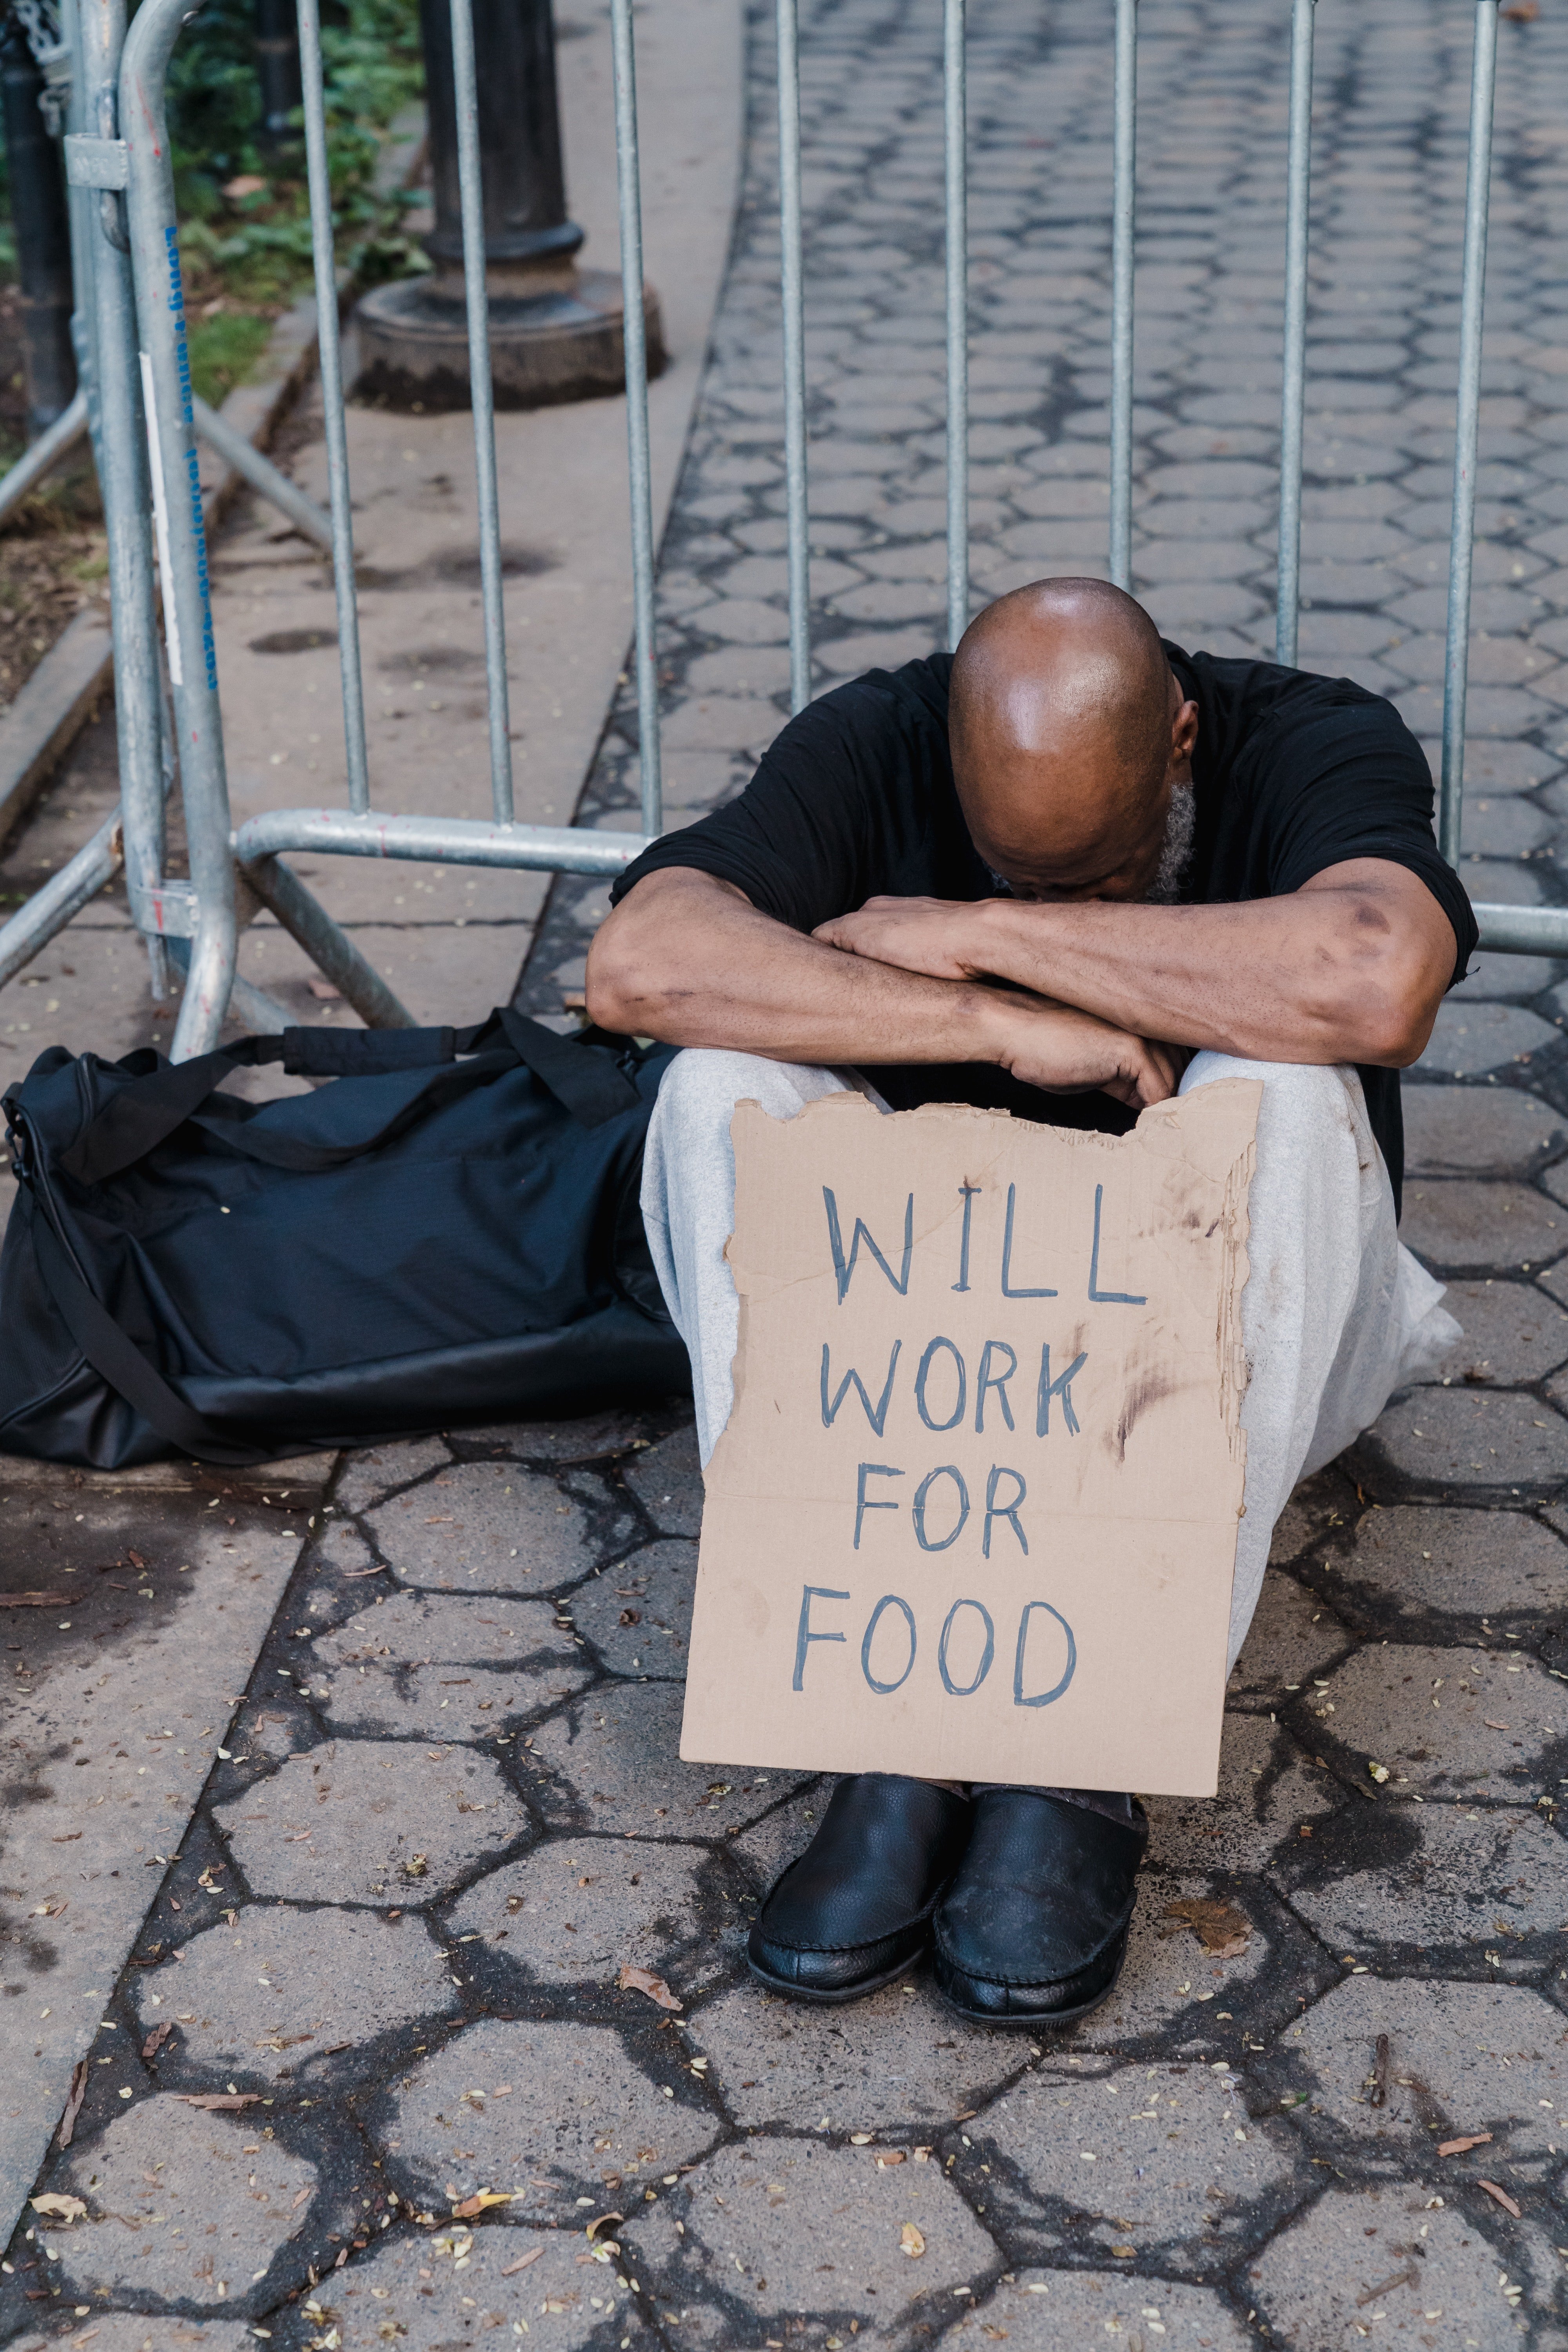 The homeless man revealed he hadn't eaten in days. | Source: Pexels